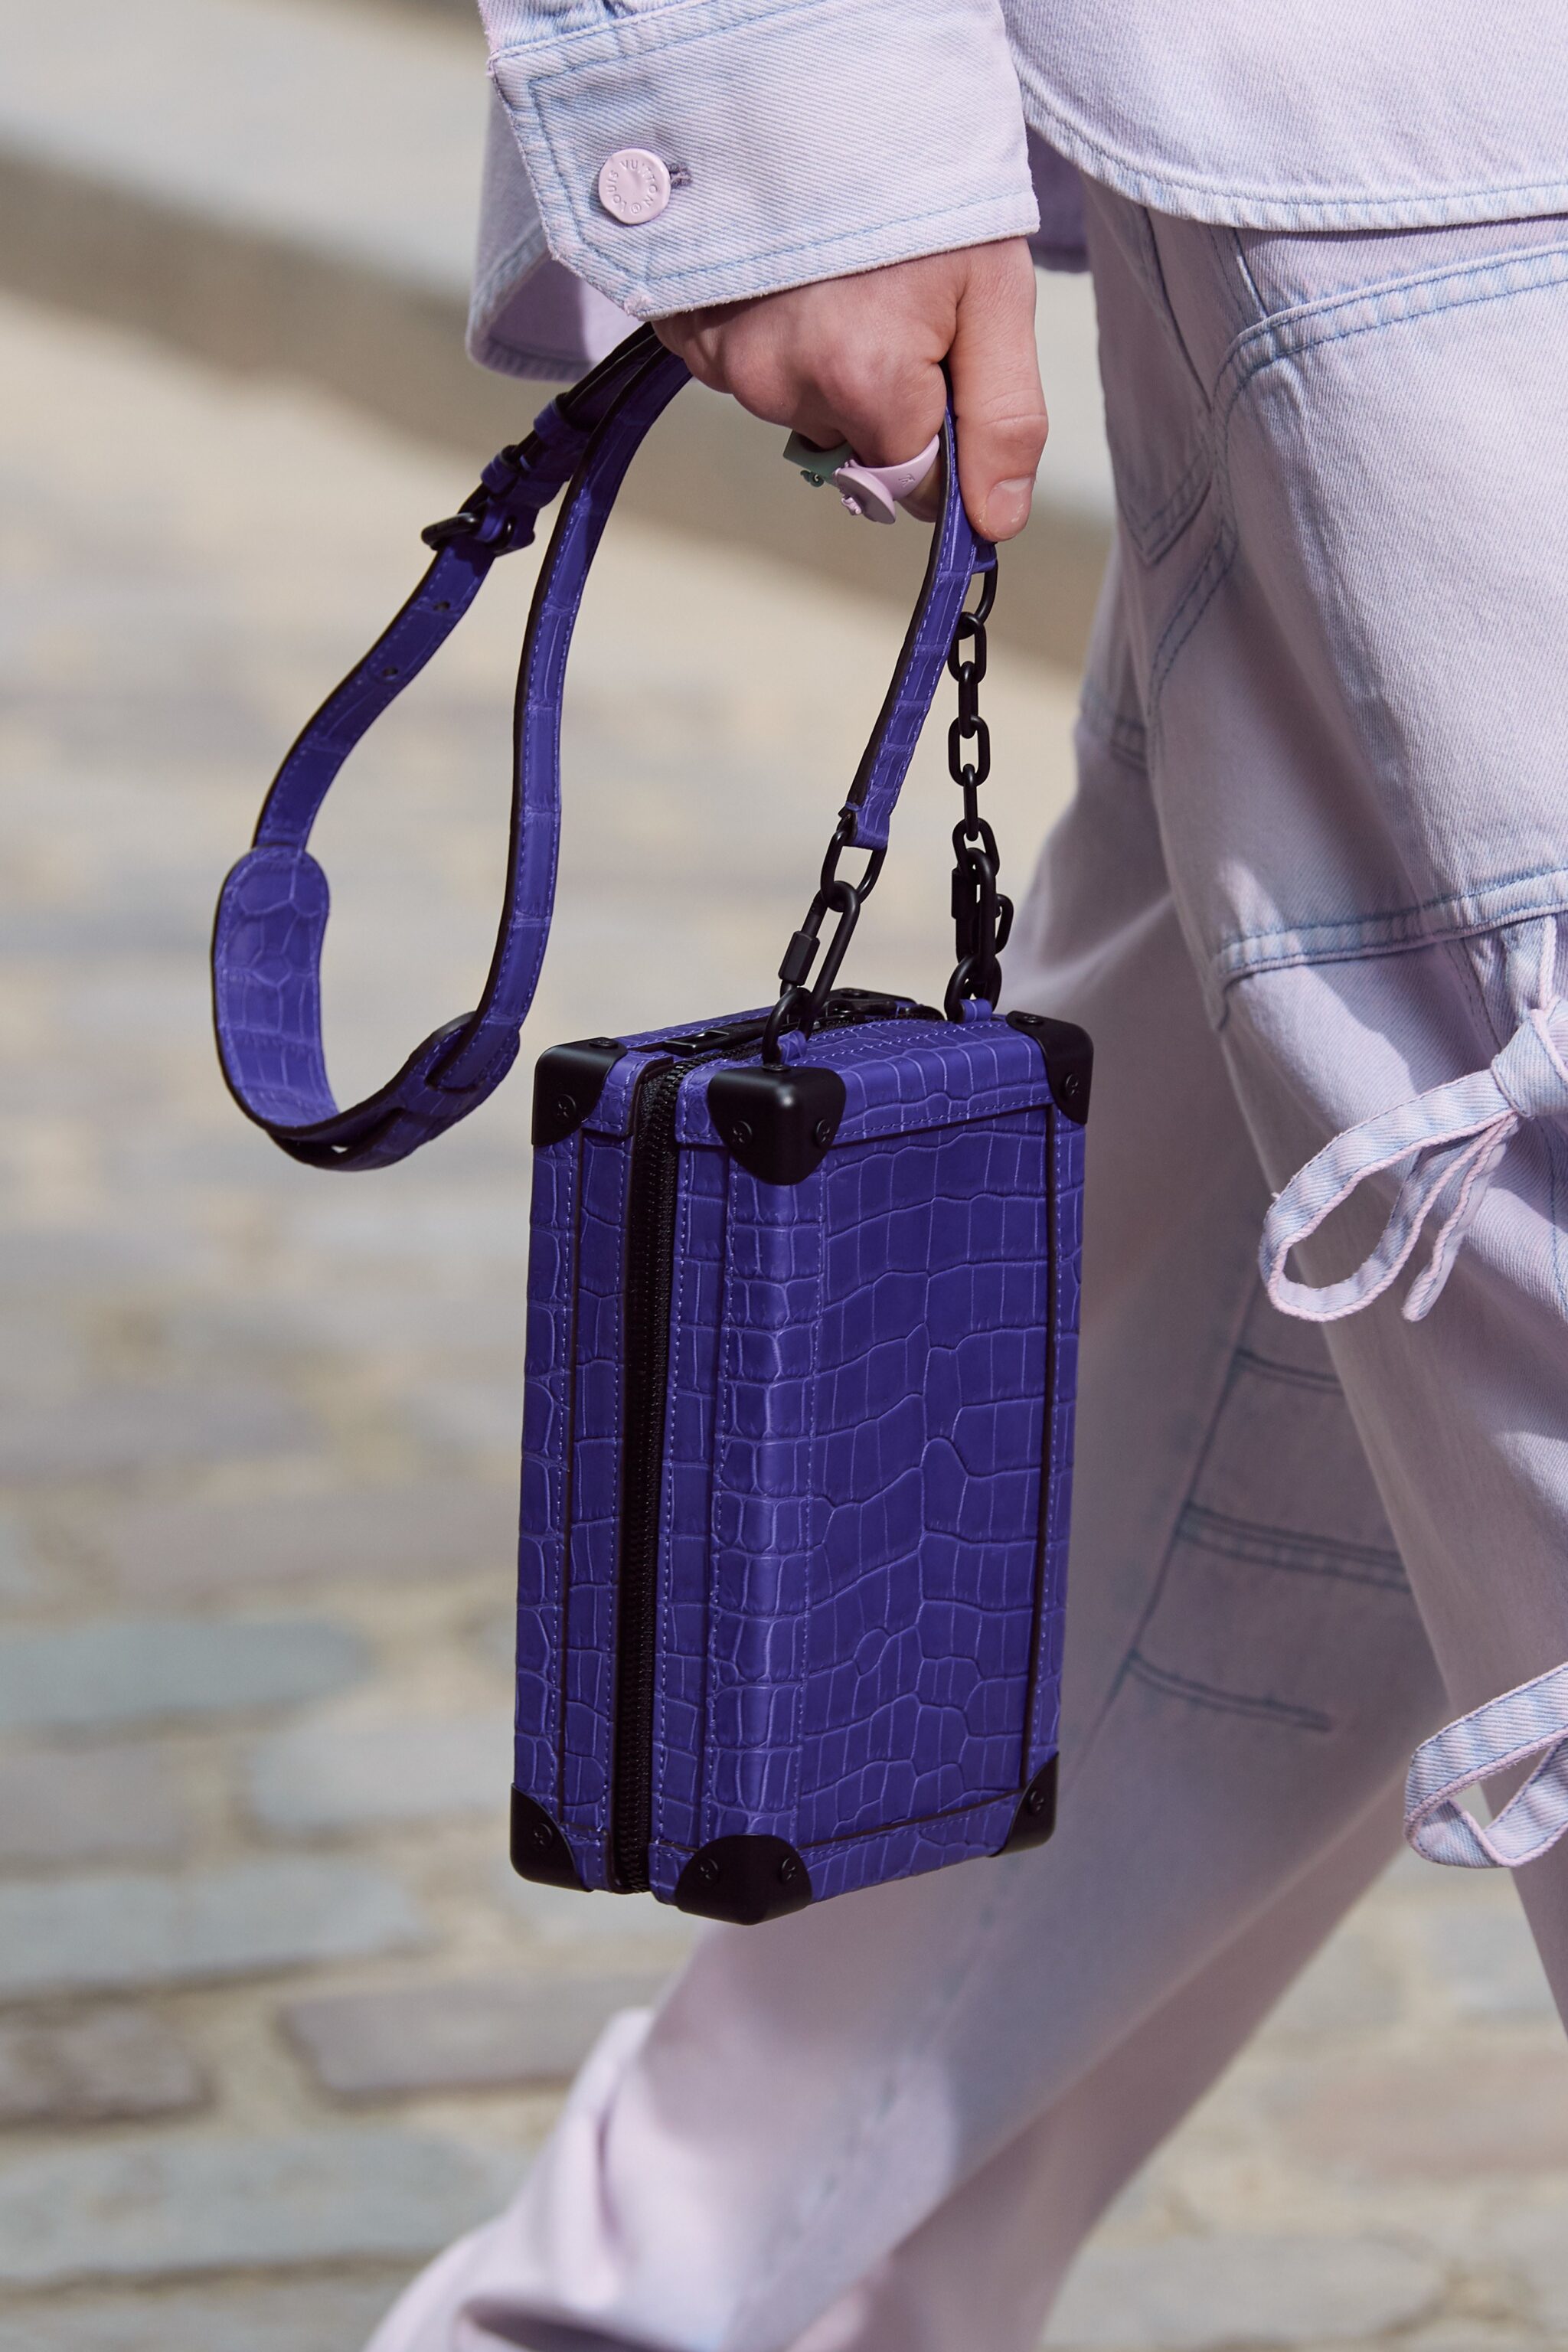 Louis Vuitton Runway Miniature Essential Trunk Bag NEW Last One